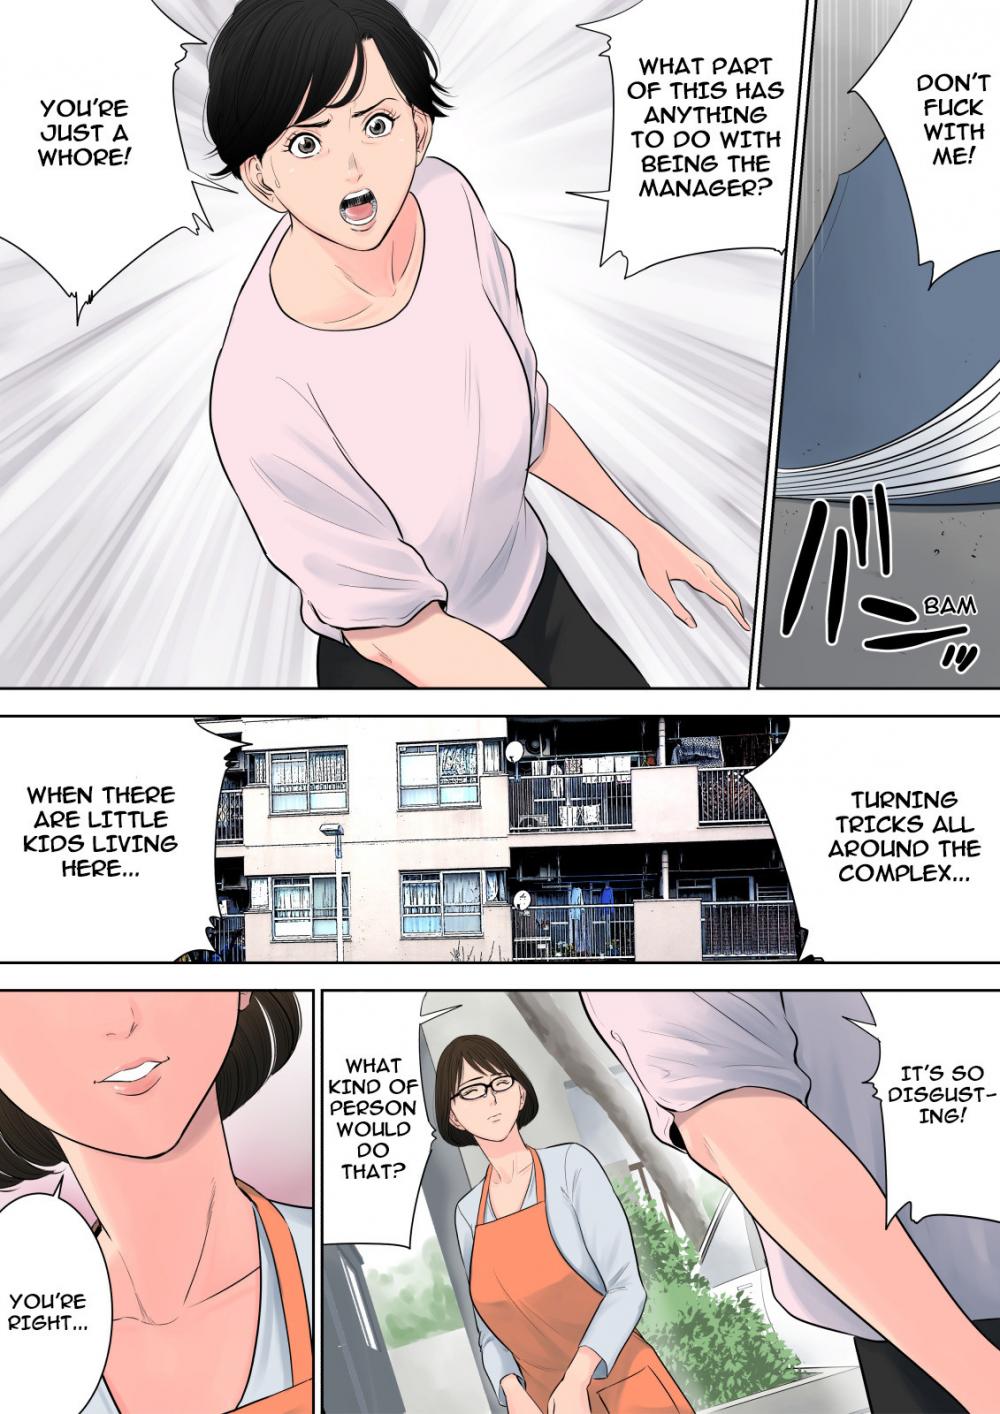 Hentai Manga Comic-Tsubakigaoka Housing Project Manager-Chapter 1-26